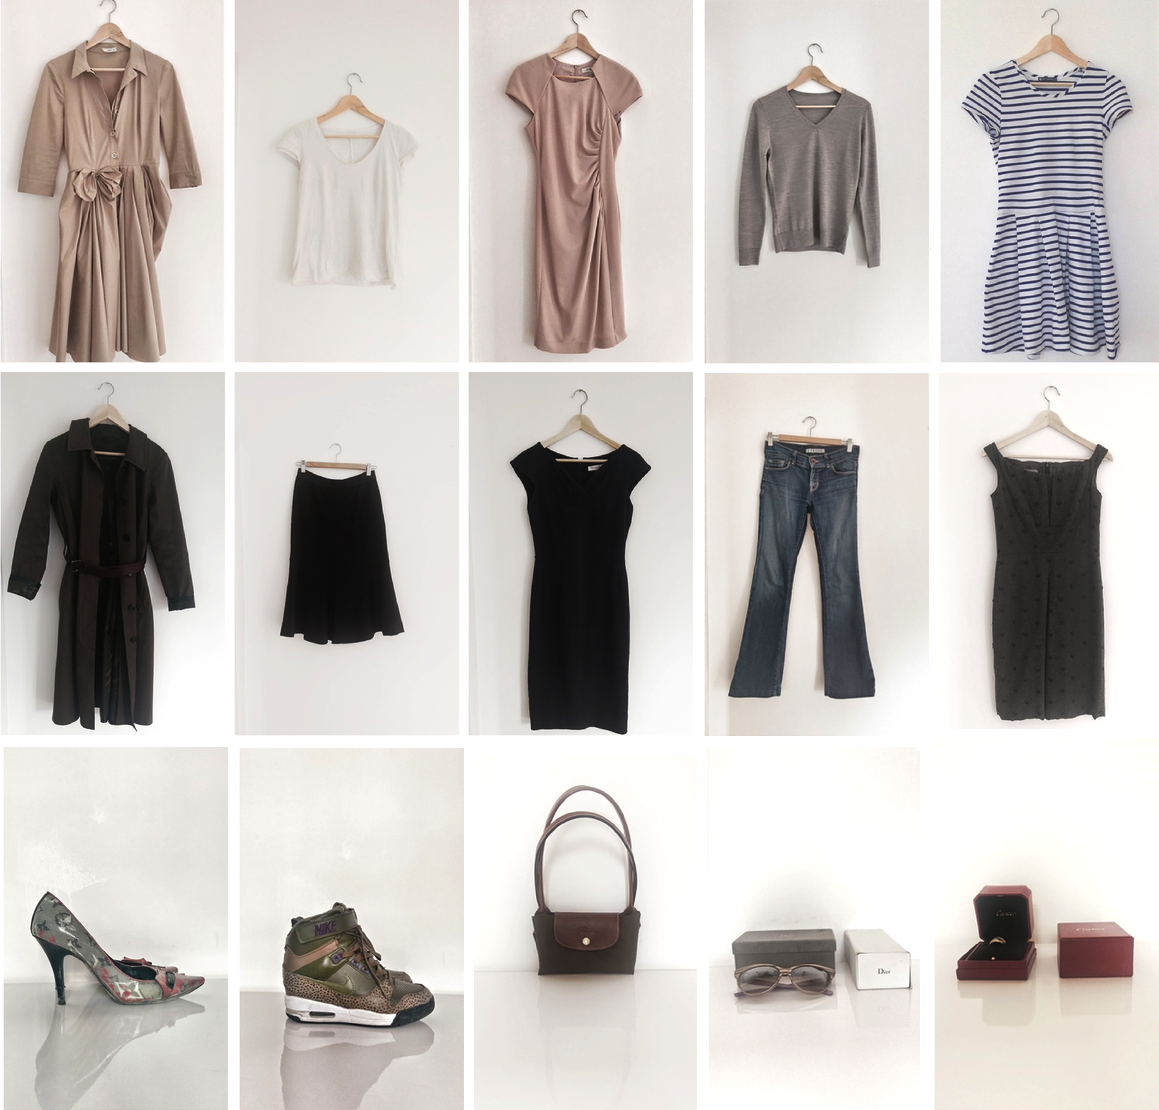 10 item wardrobe - neutral monochrome